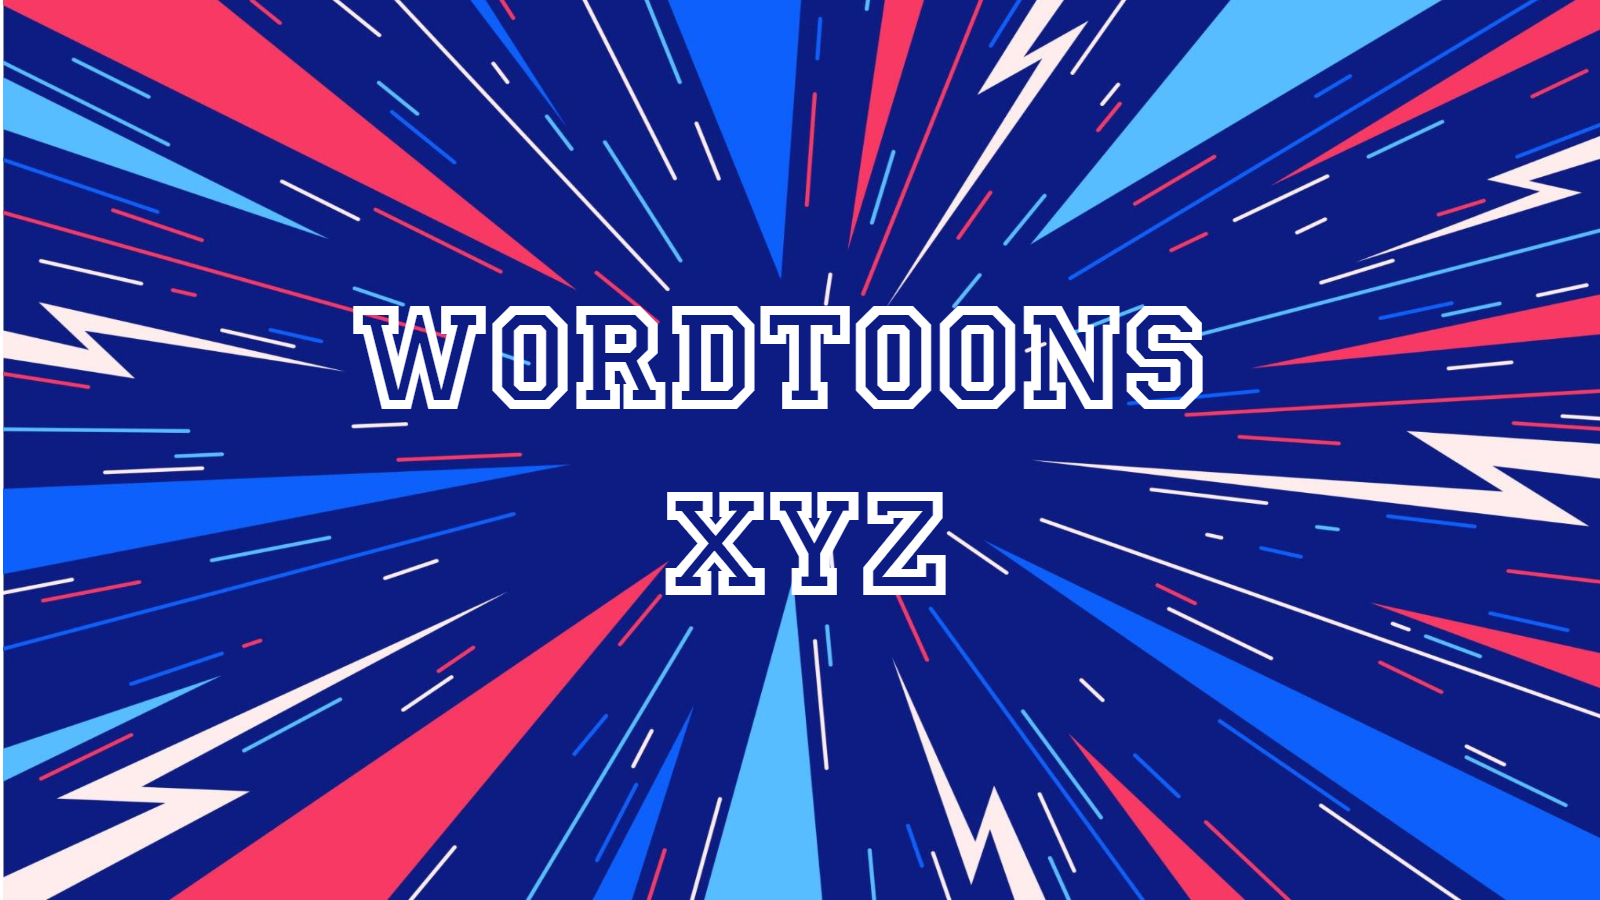 webtoons XYZ is a comic site